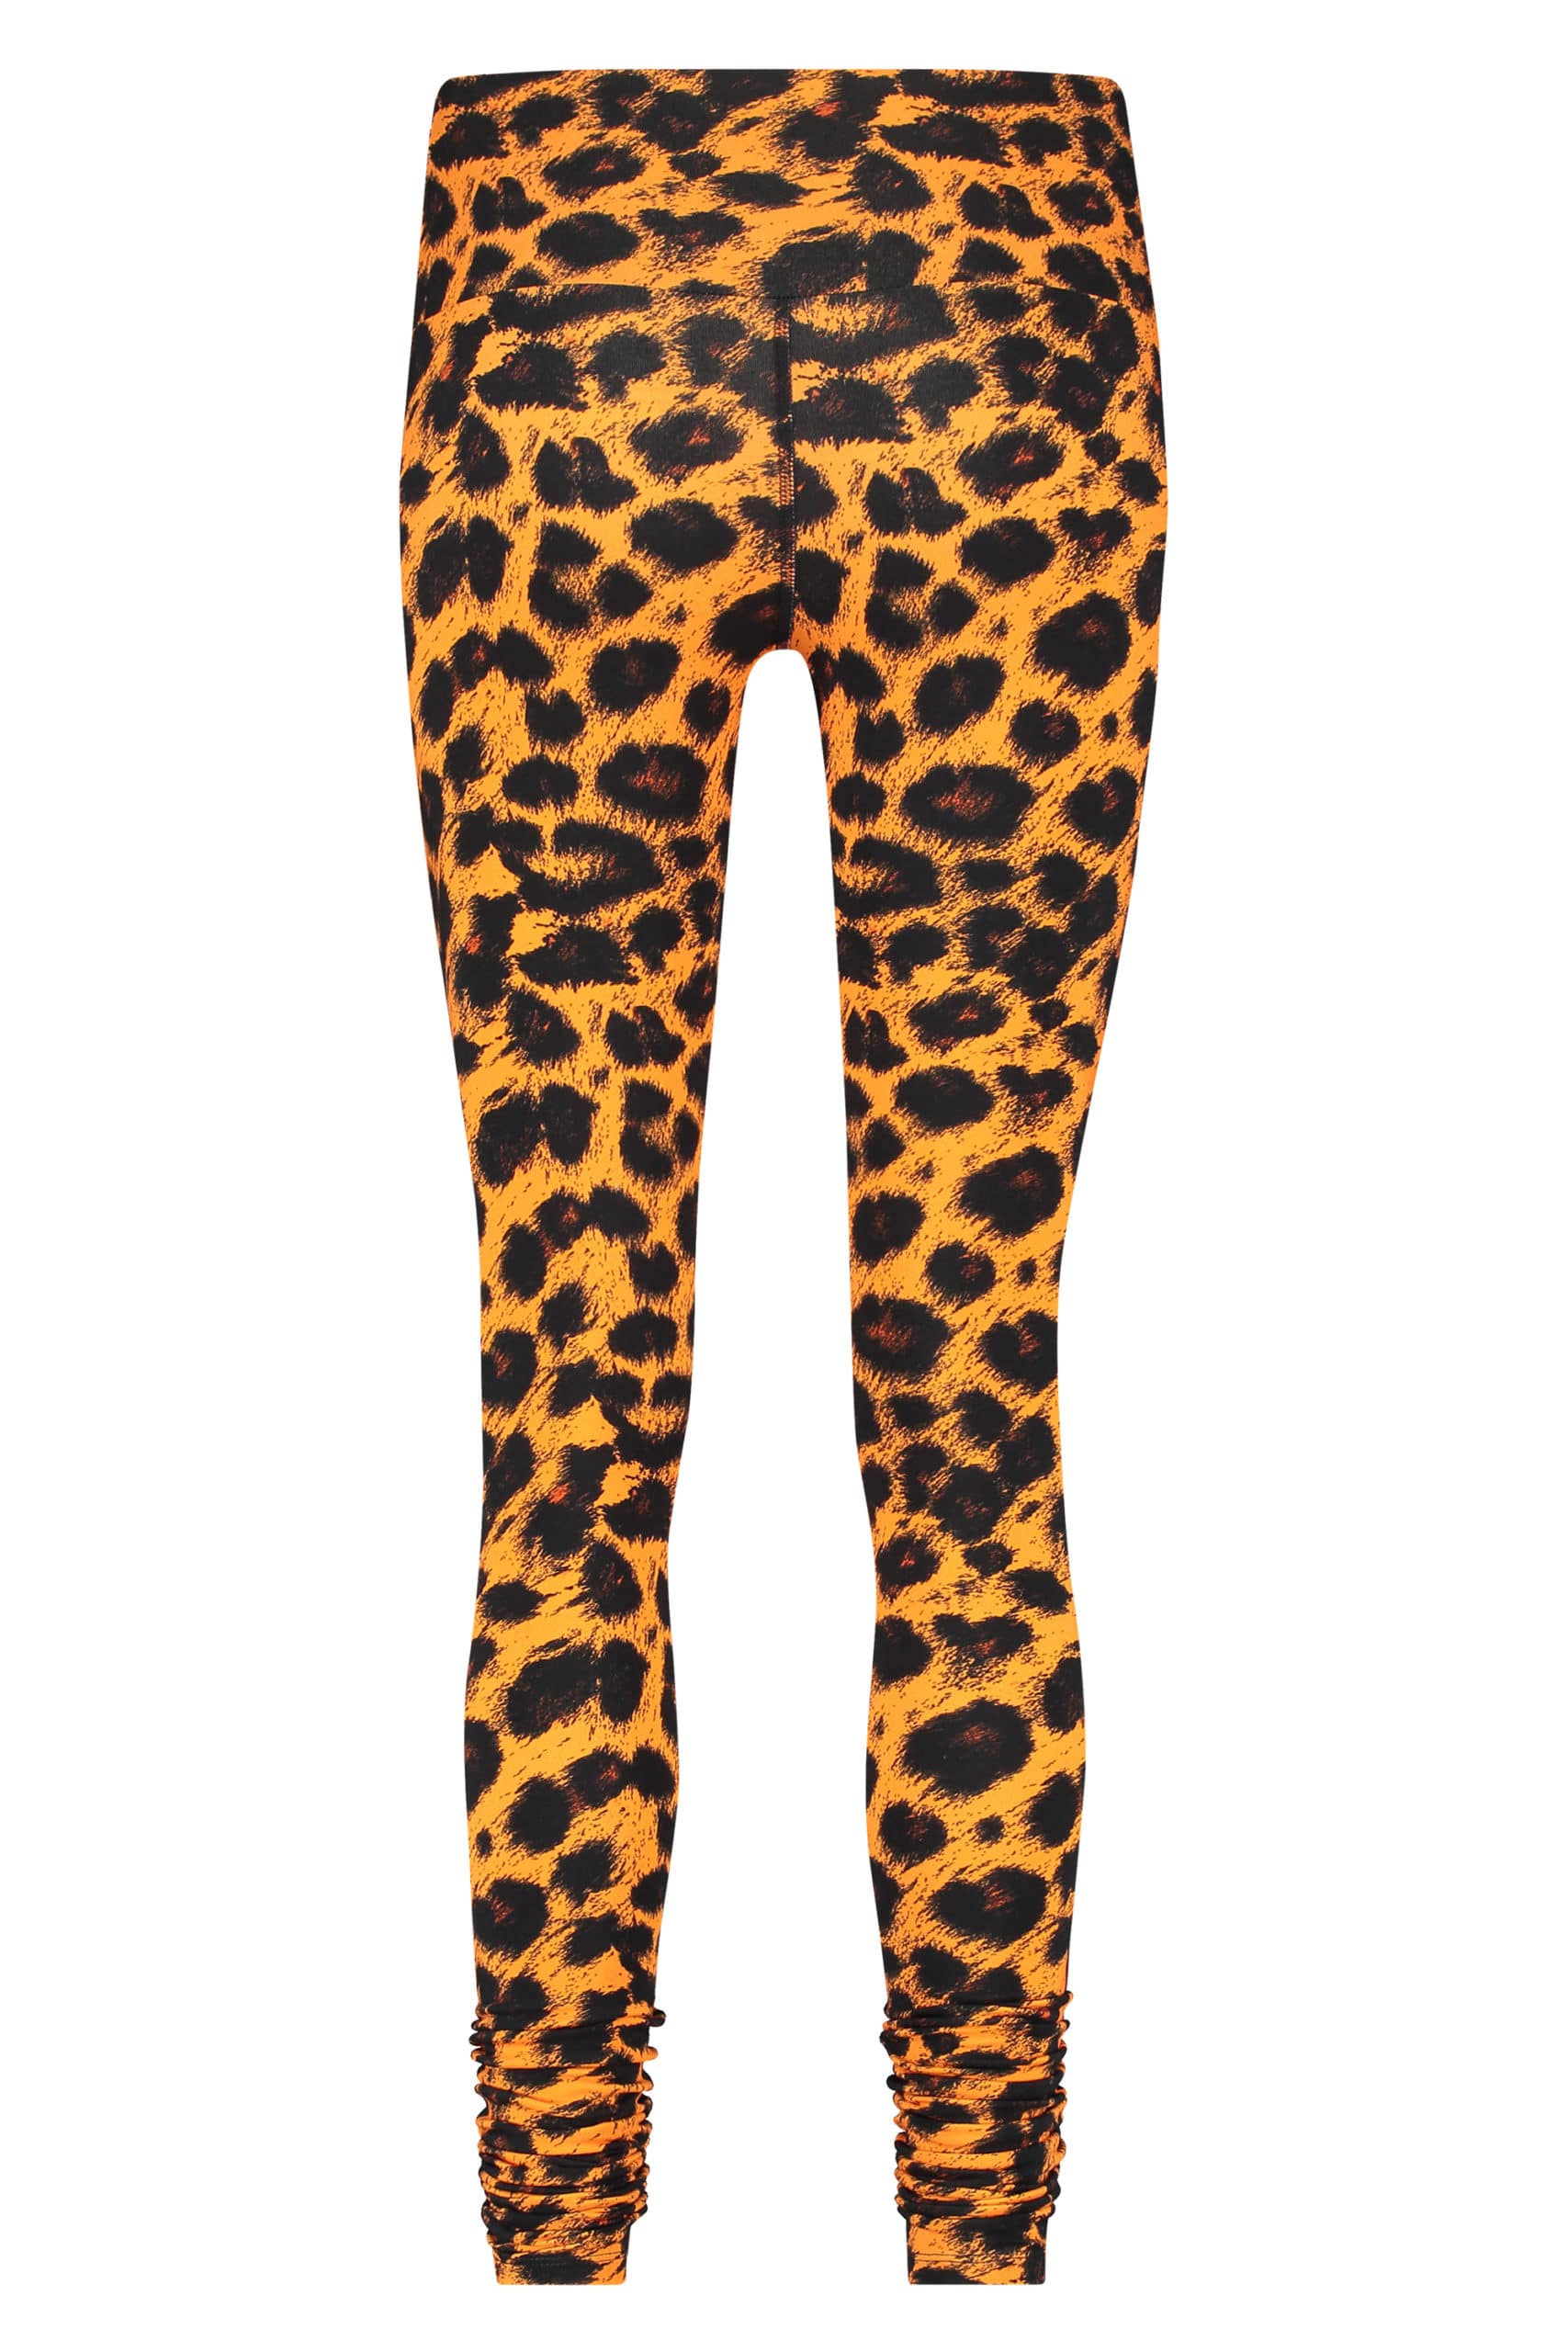 Satya leggings-leopard-10125528-back